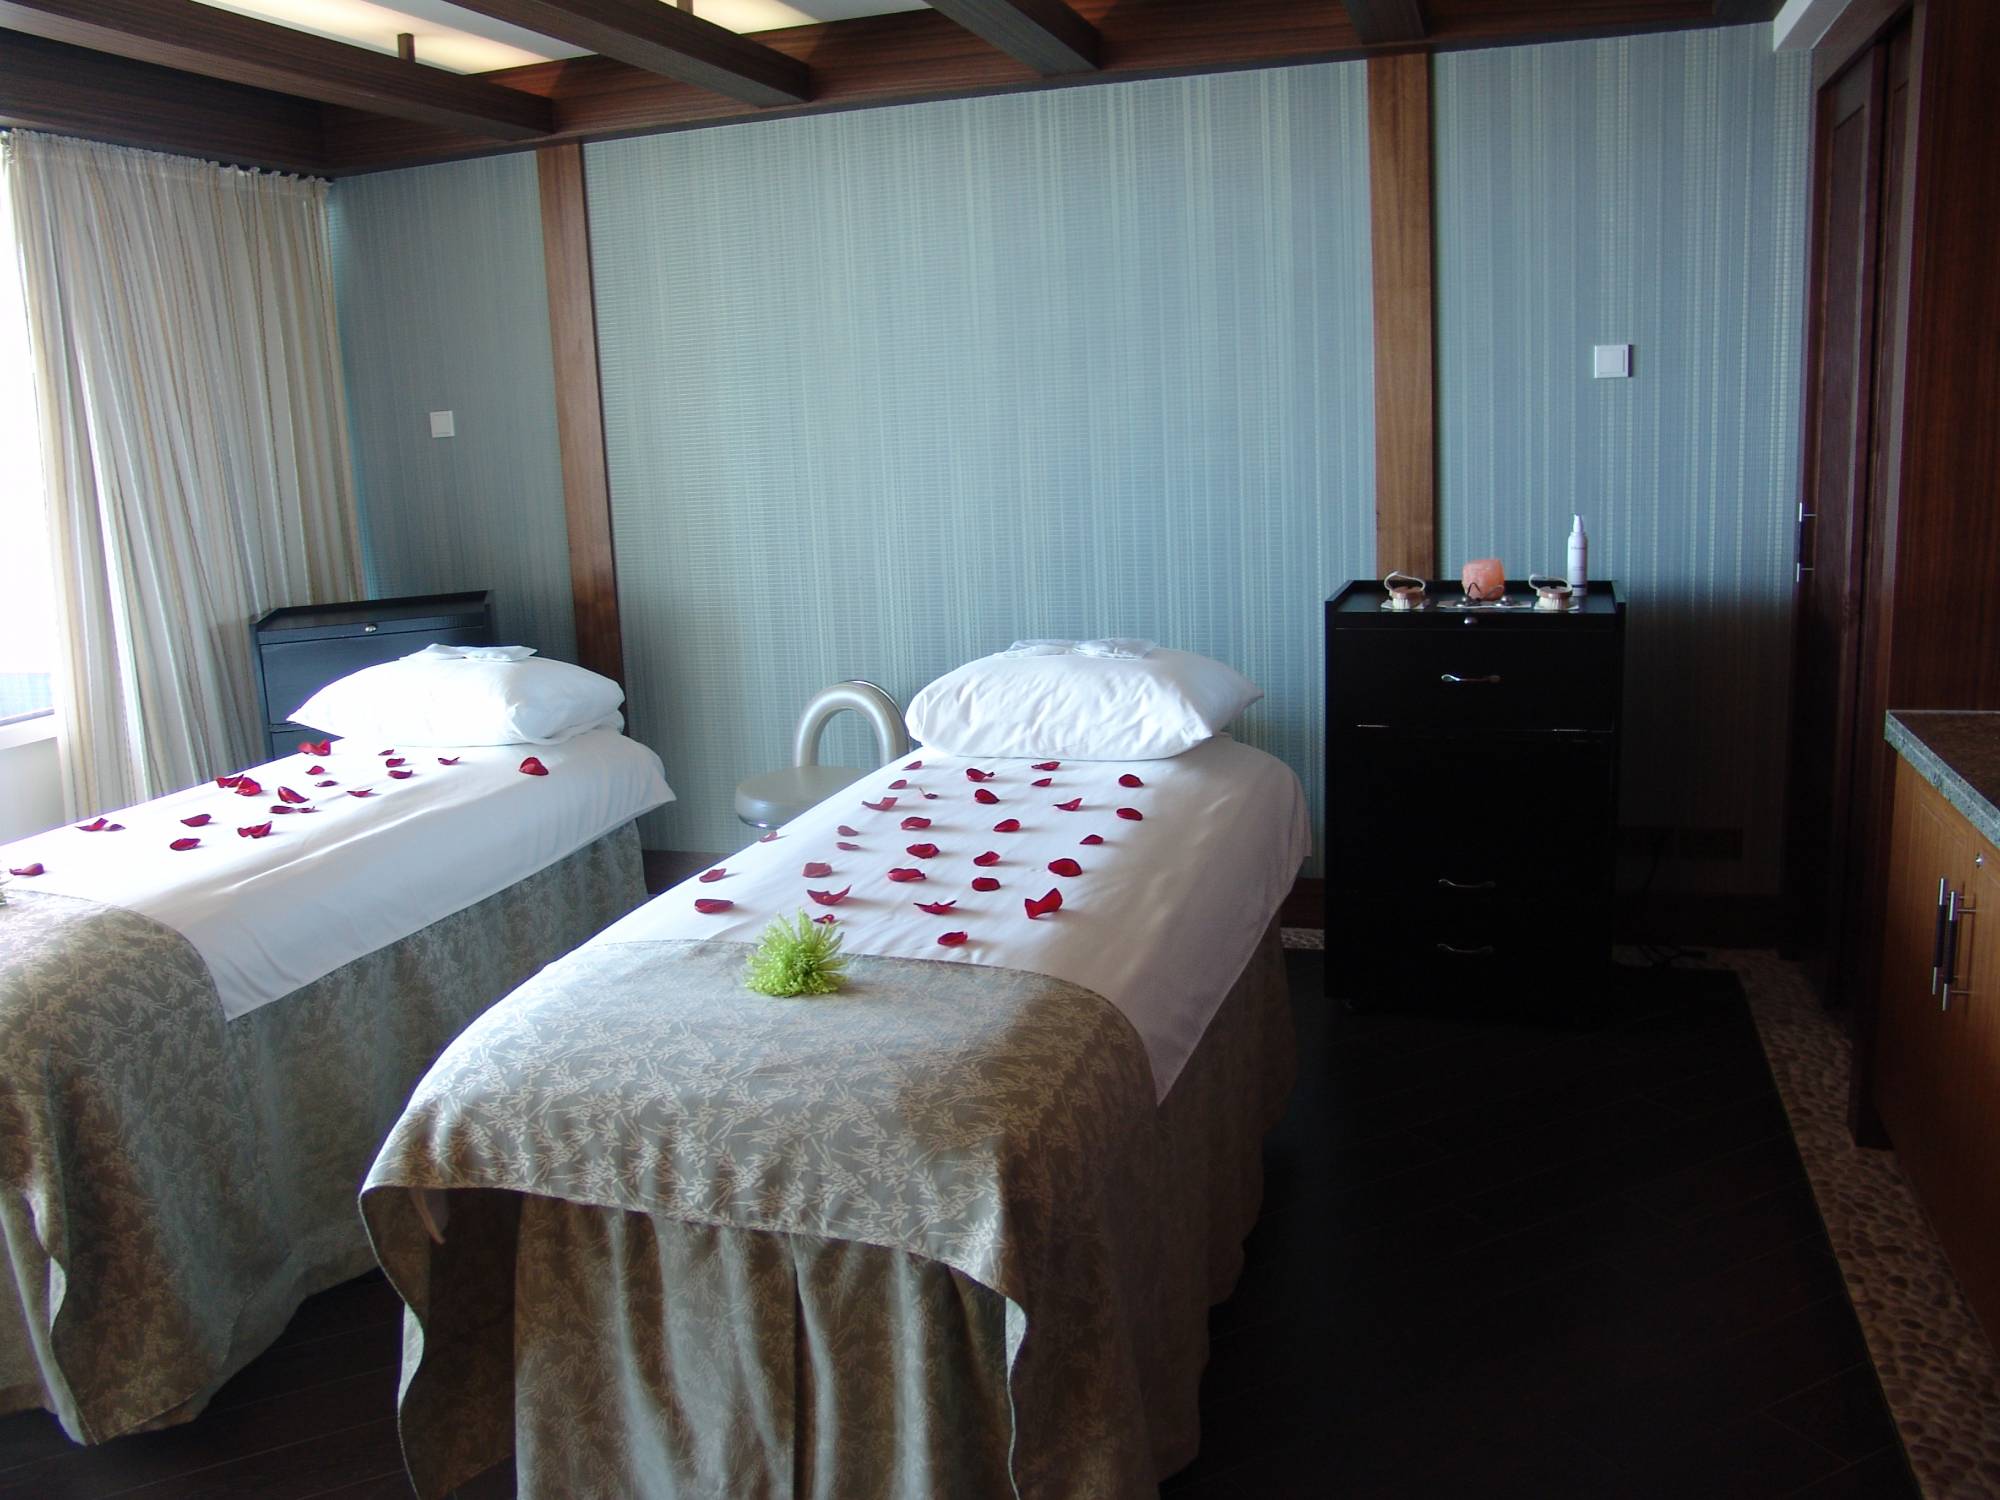 Disney Dream - Senses Spa massage rooms